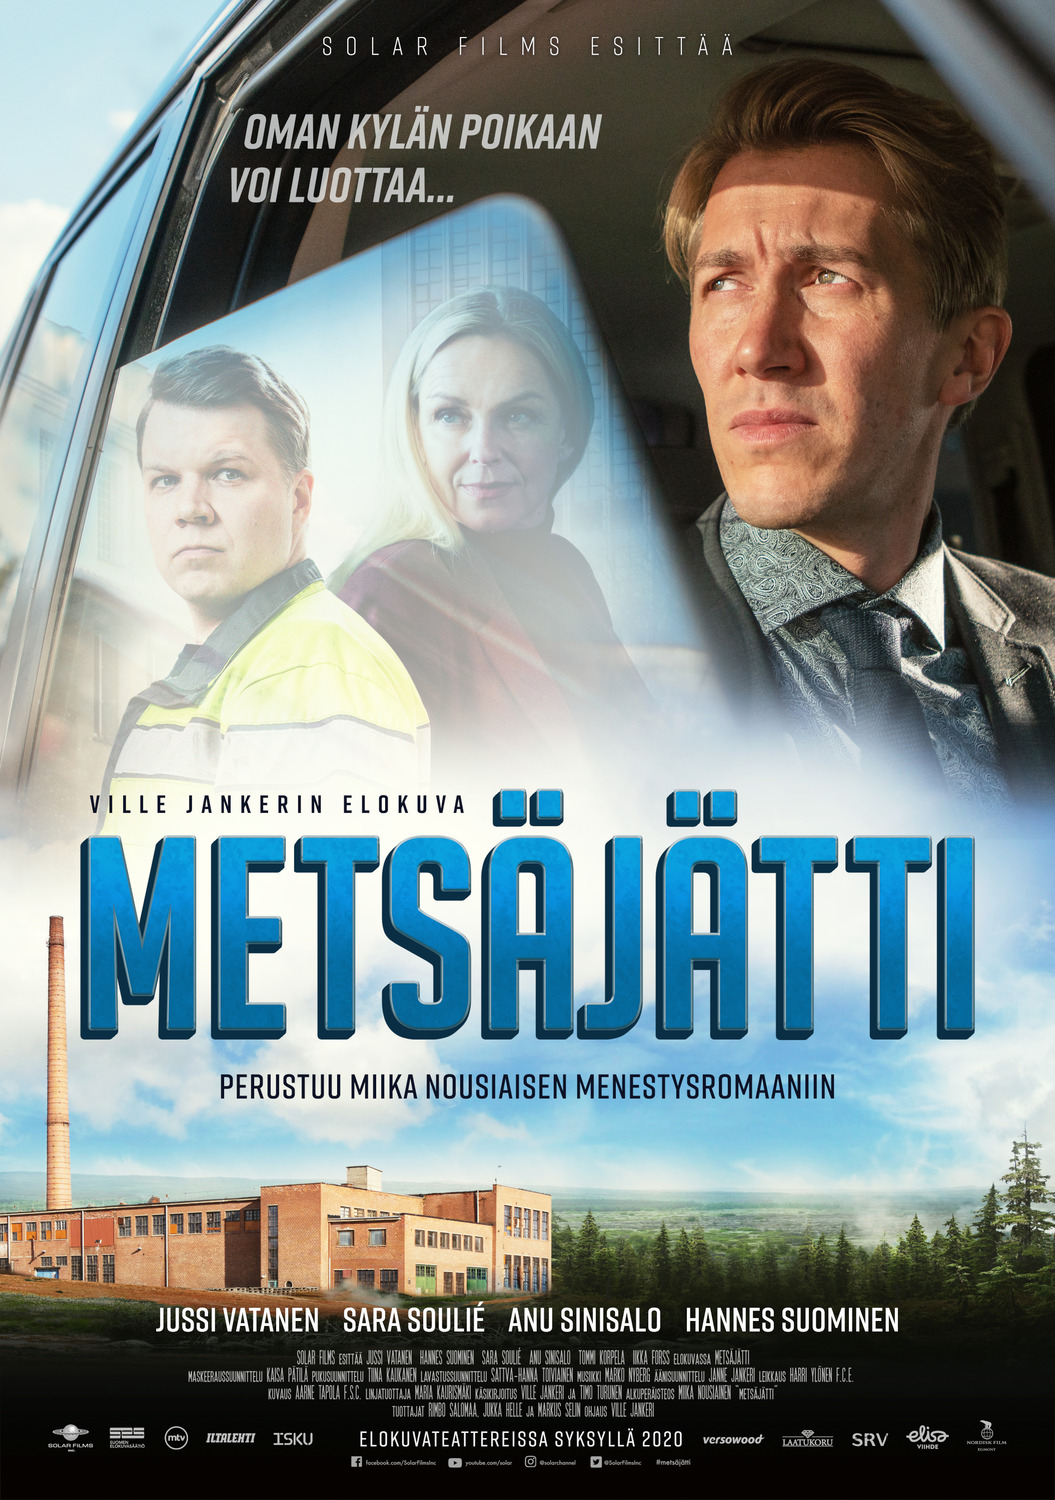 Extra Large Movie Poster Image for Metsäjätti 